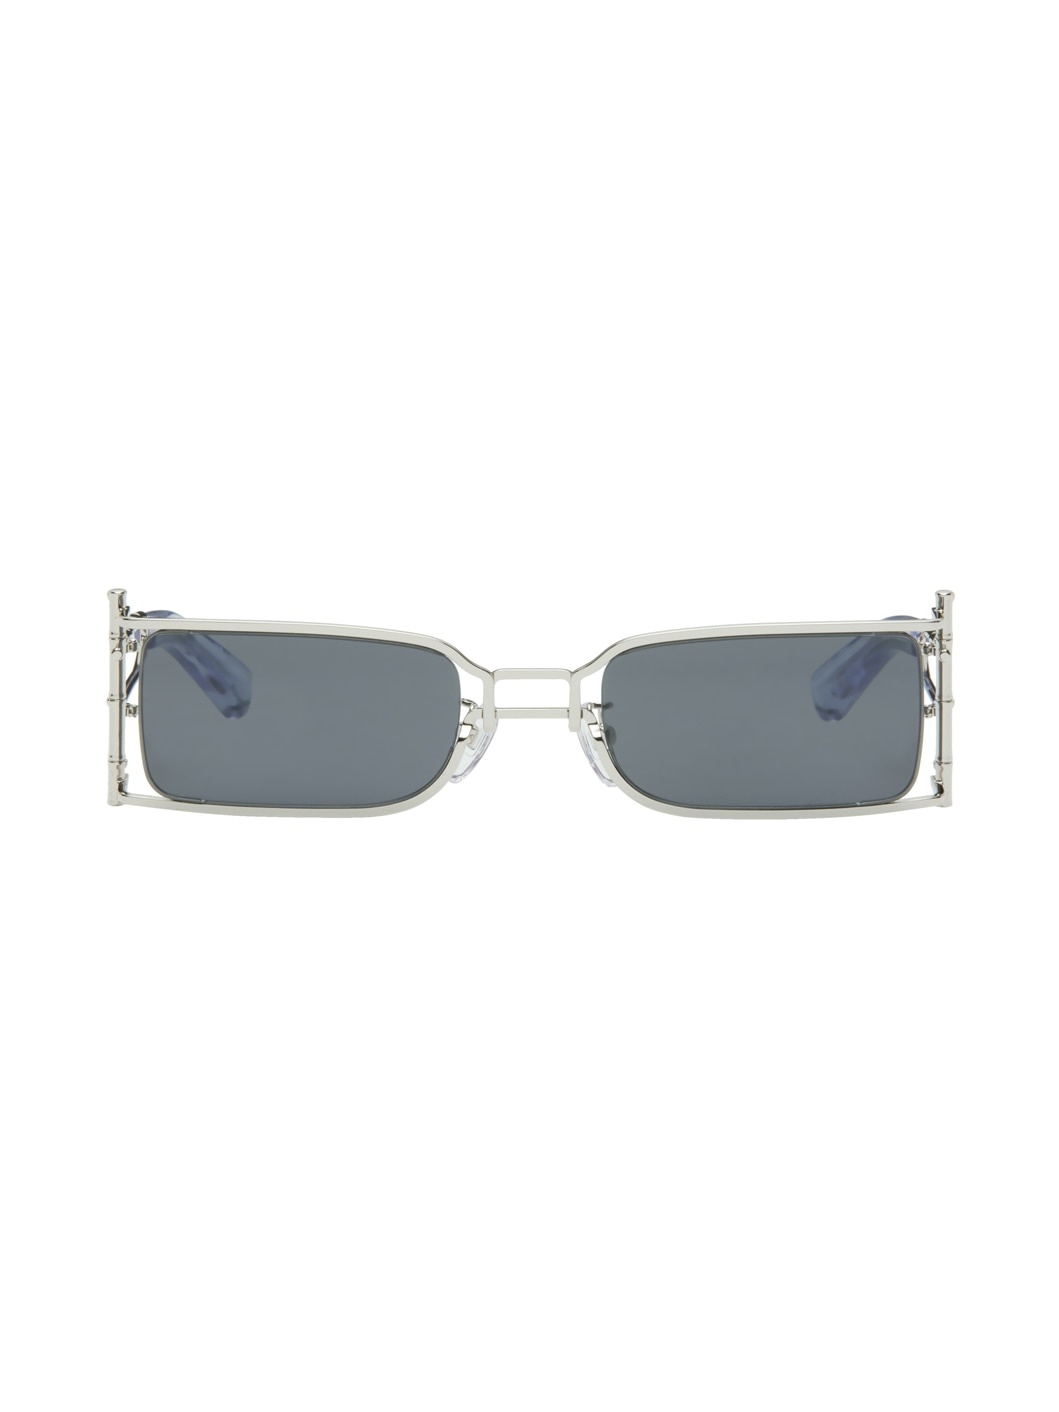 SSENSE Exclusive Silver Bamboo Sunglasses - 1